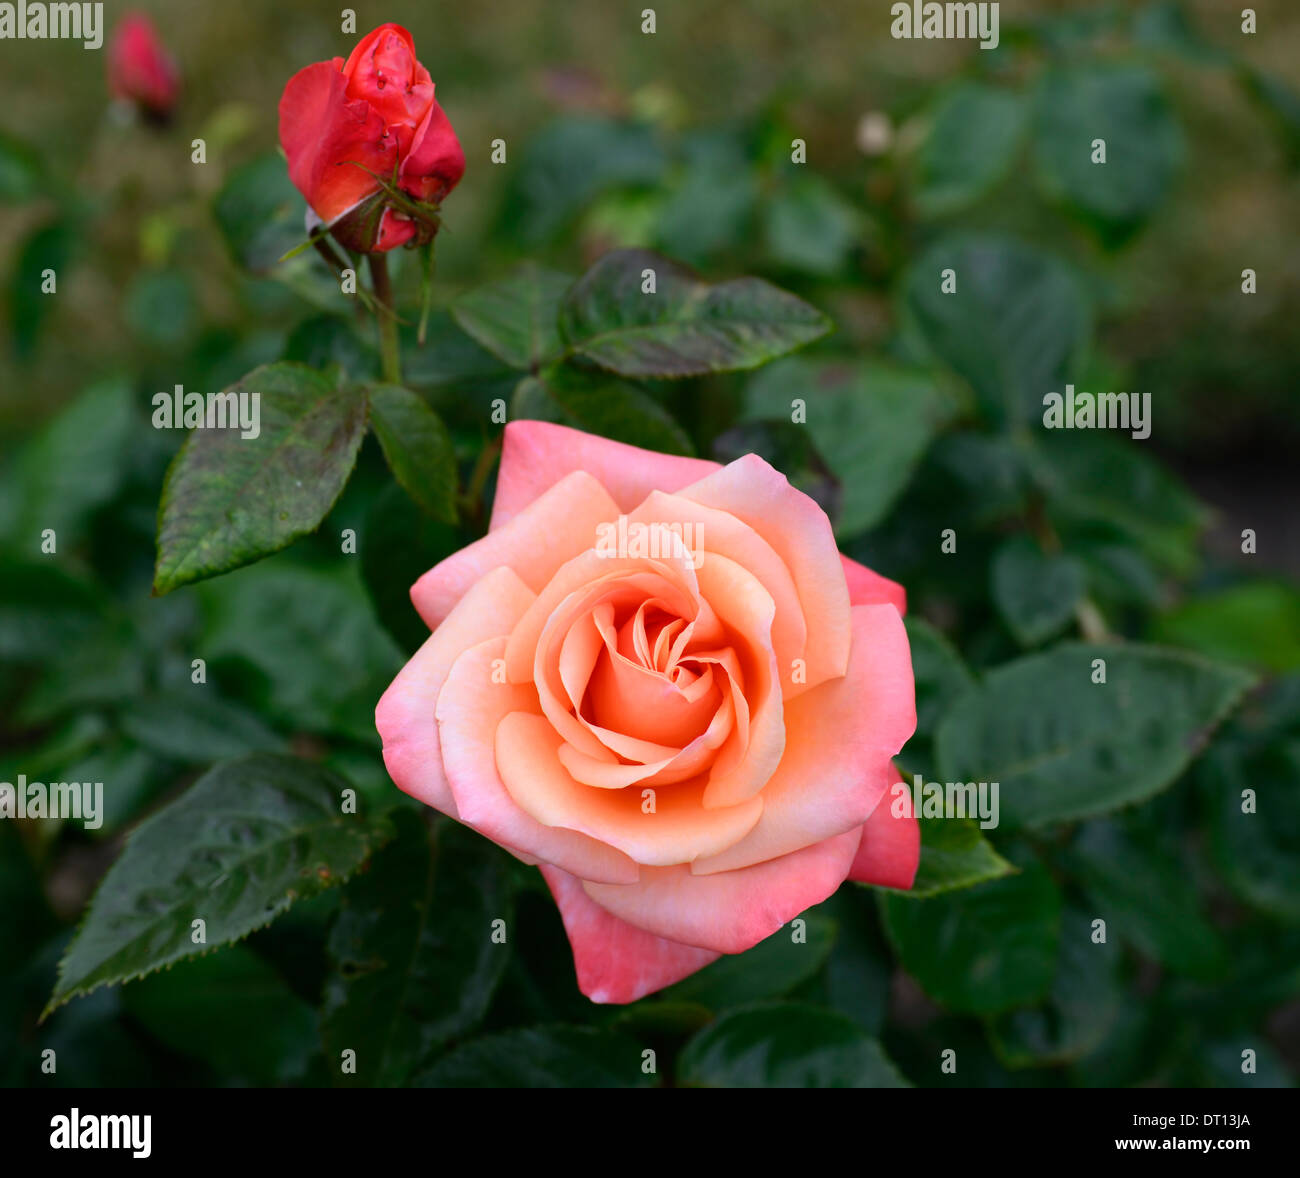 Silver jubilee roses -Fotos und -Bildmaterial in hoher Auflösung – Alamy